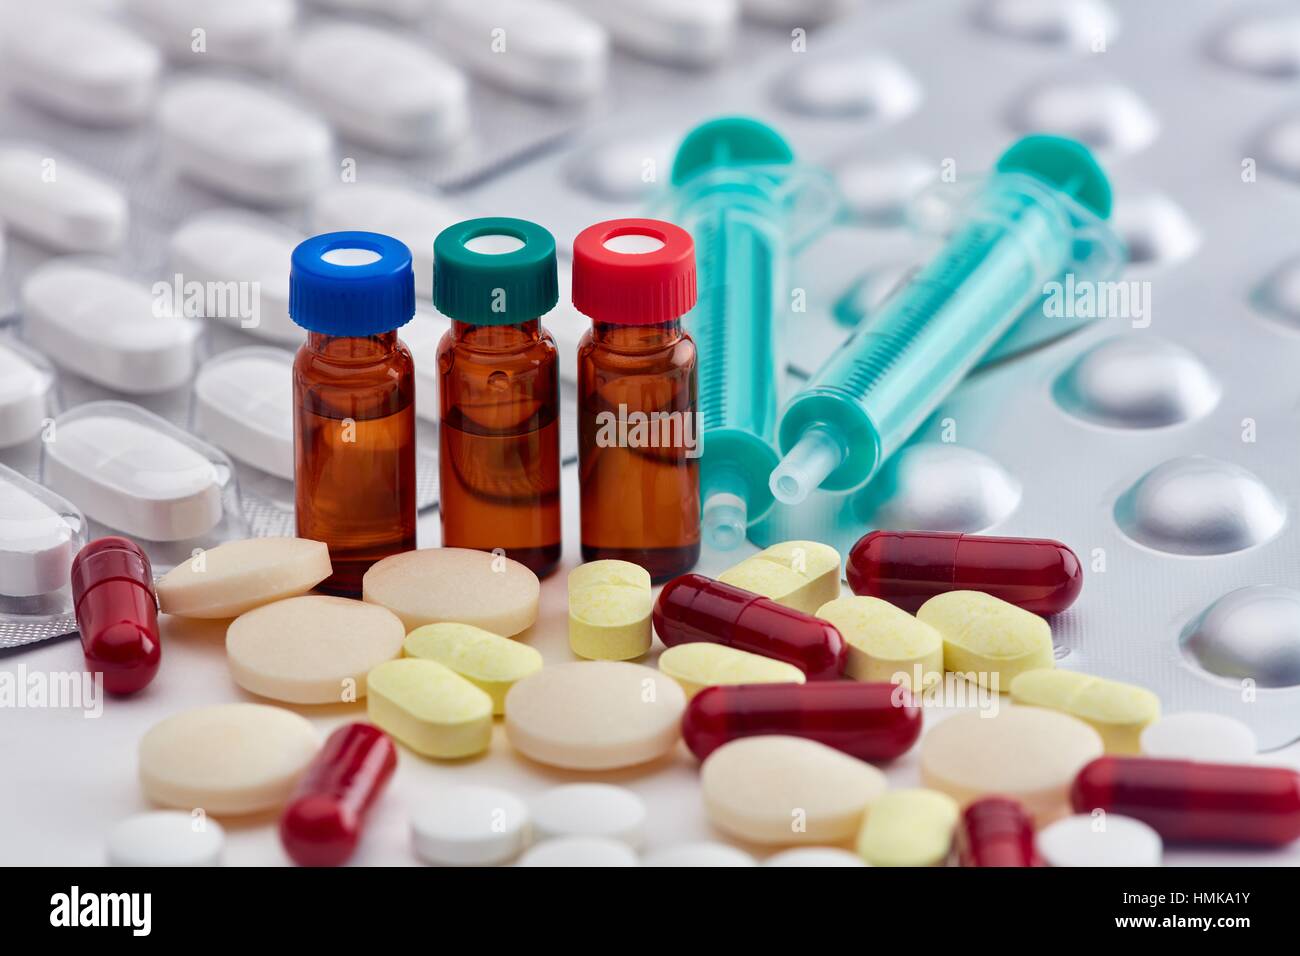 Pharmaceutical medicines, pills, capsules, vials and syringe Stock Photo